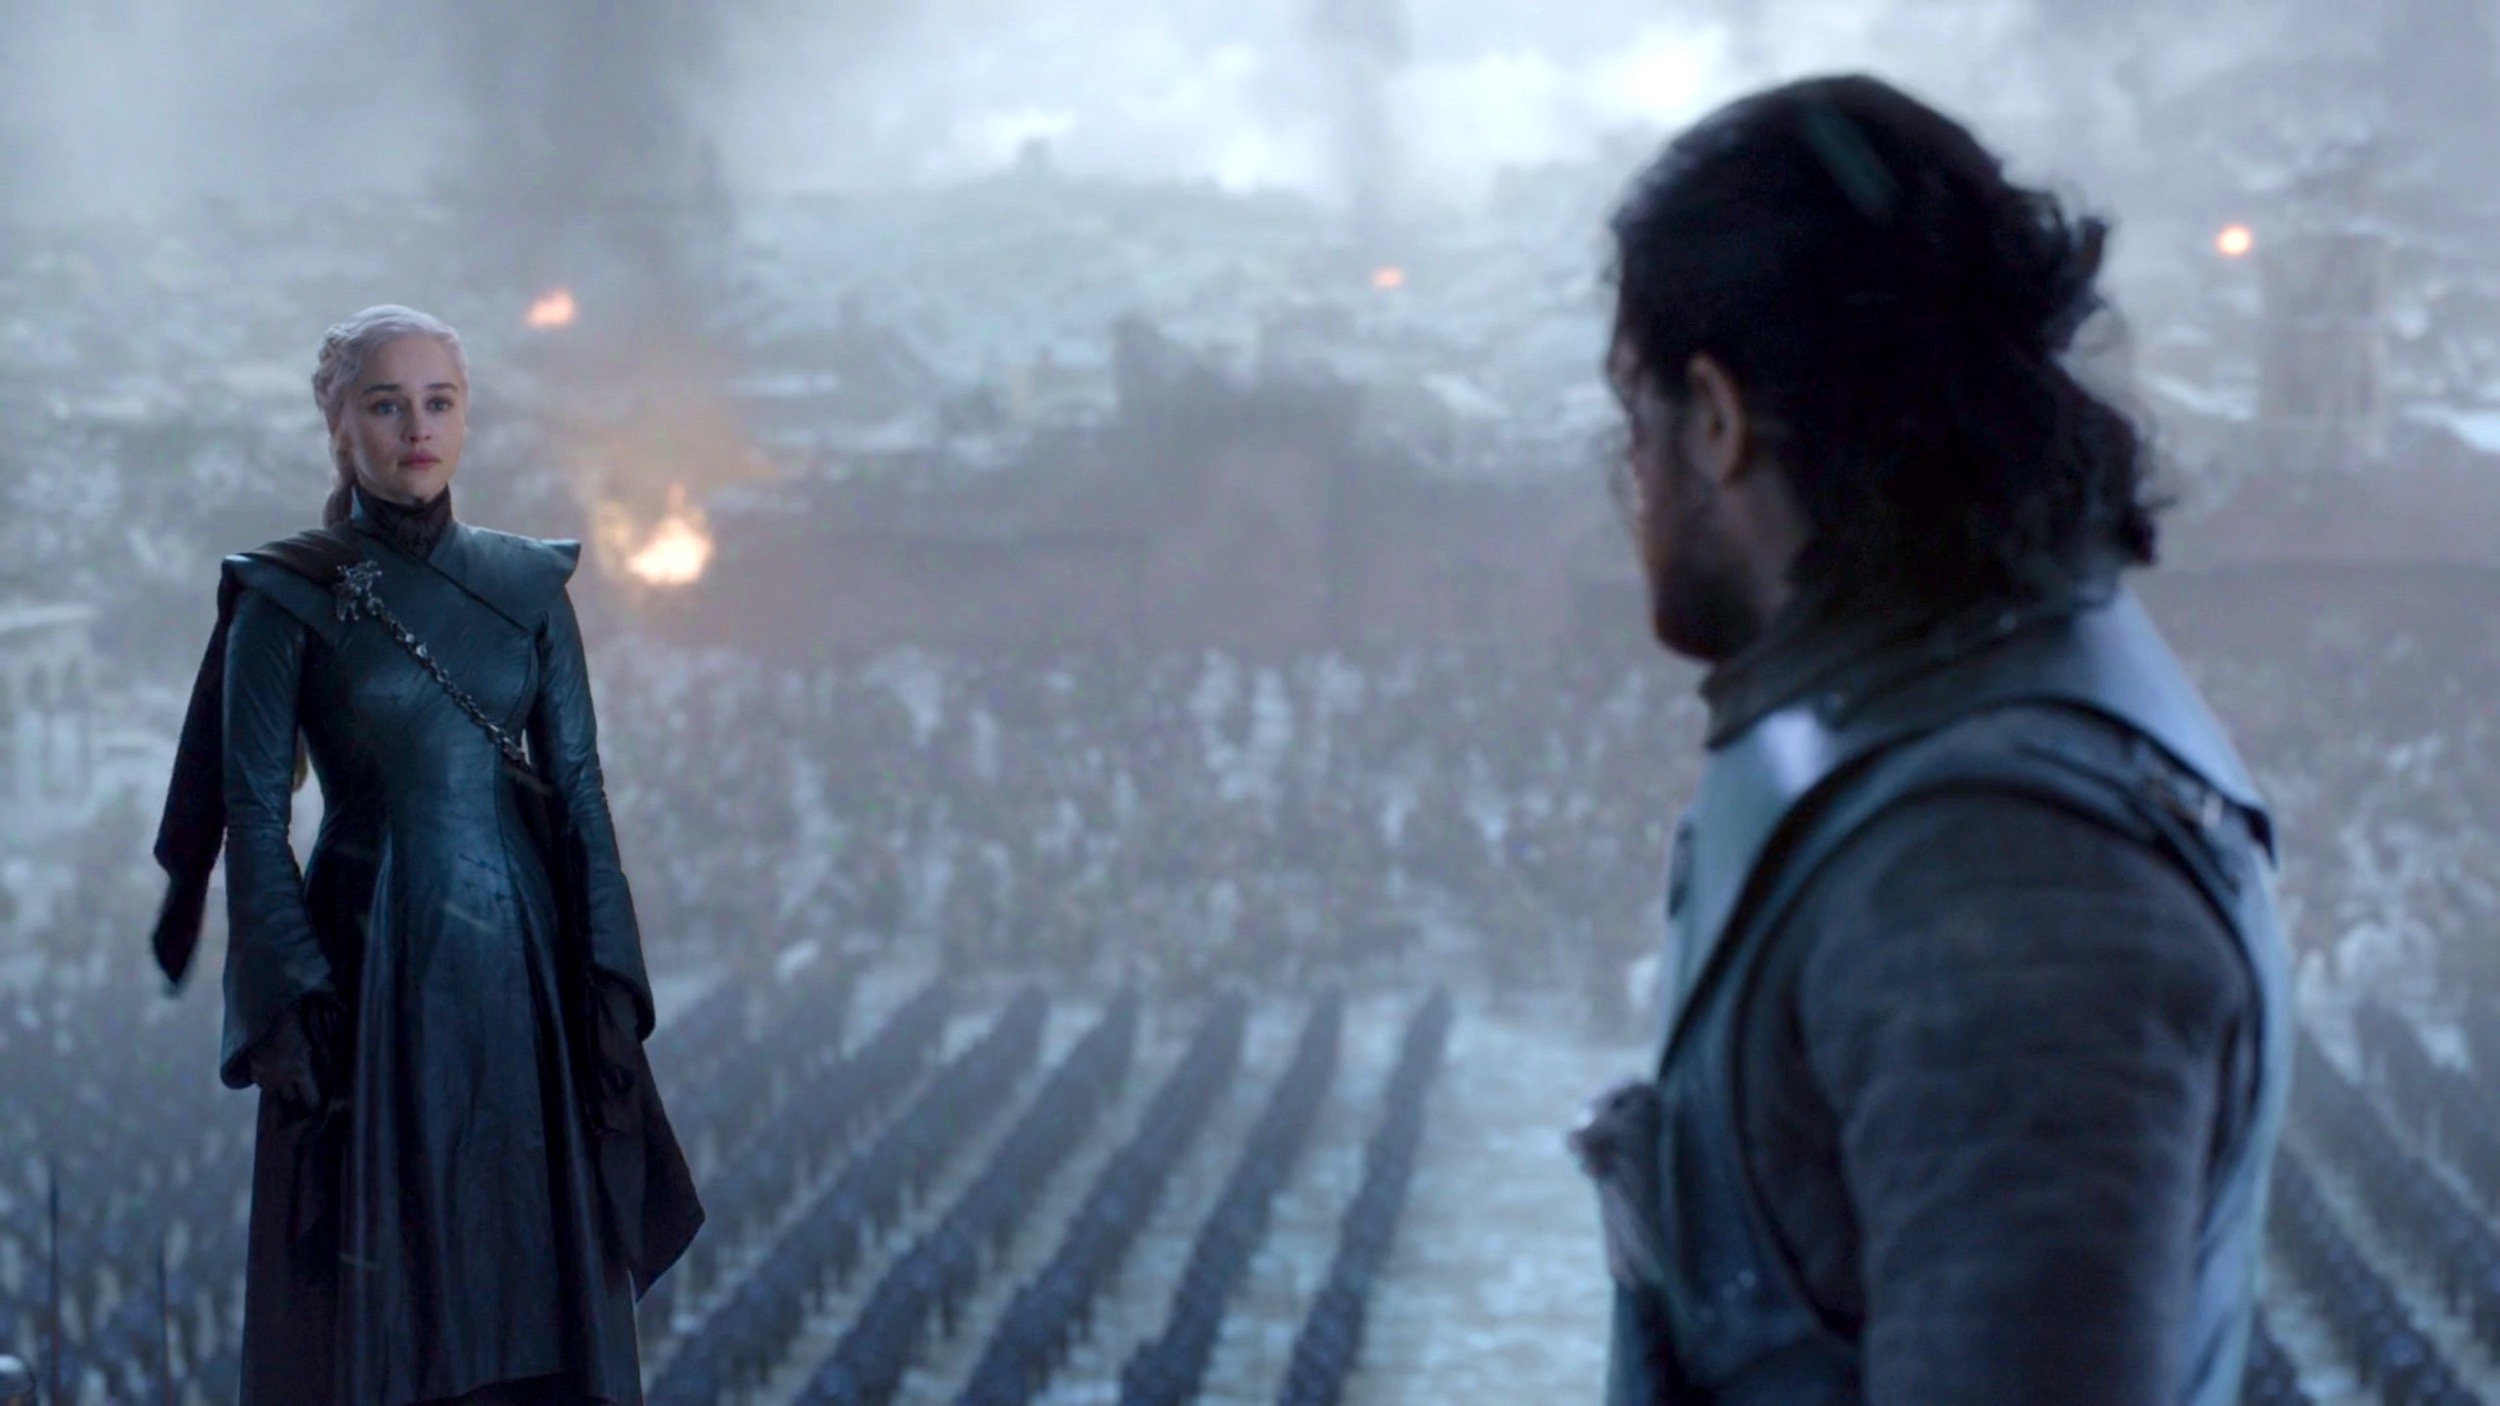 Daenerys Targaryen And Jon Snow In Got 8x06 The Iron Throne The Unaffiliated Critic